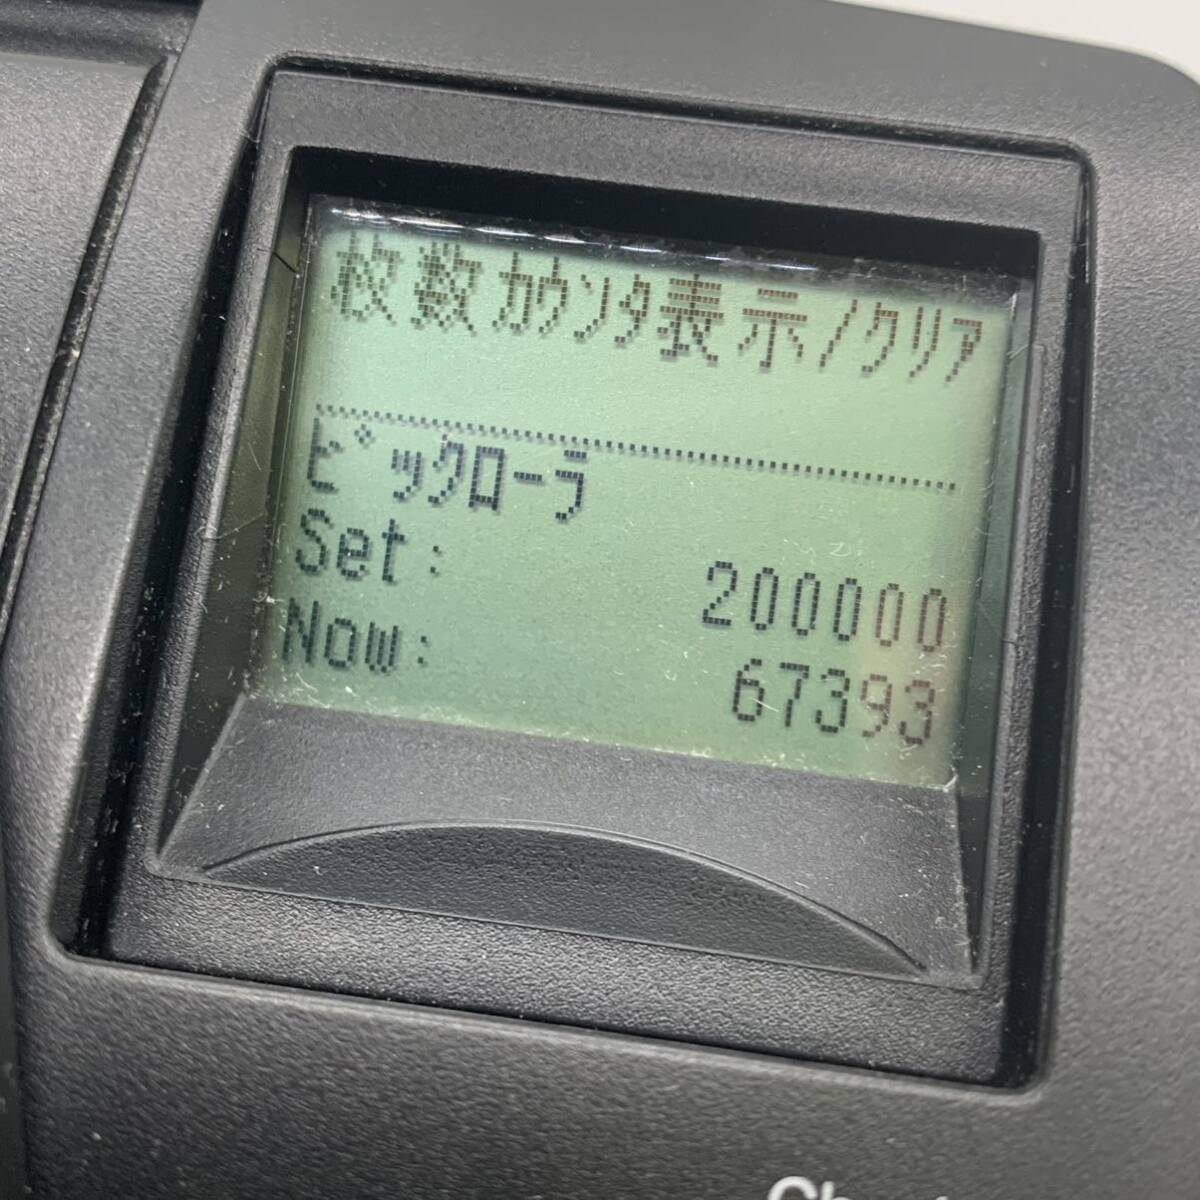 *B1003* total scan 285433 sheets FUJITSU image Scanner FI-7160 Fujitsu used 2016 year made scanner 